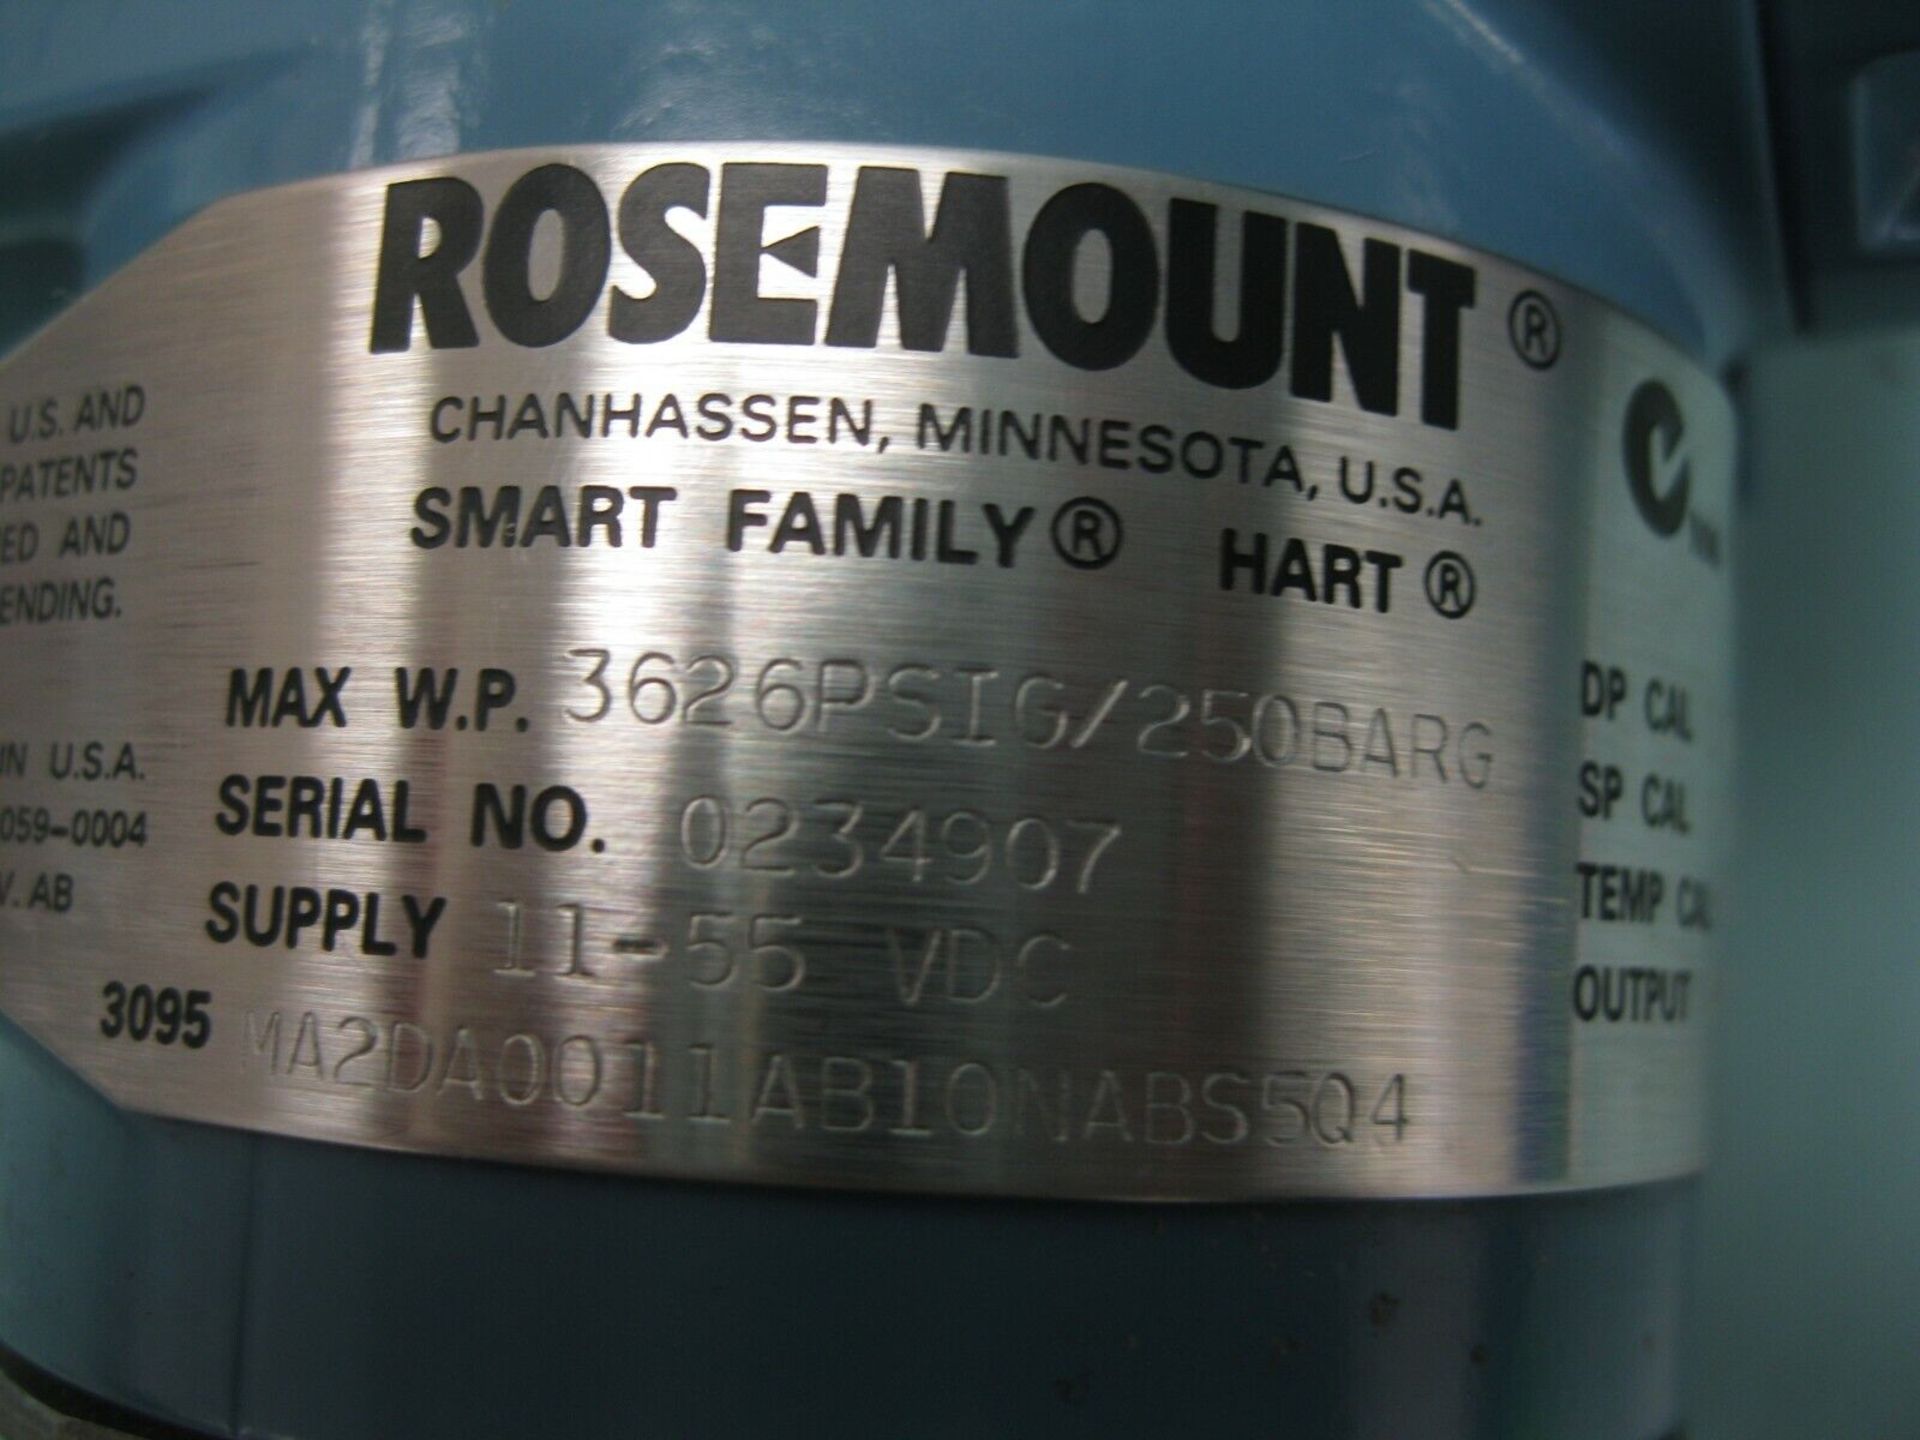 Rosemount 3095 MA2DA0011AB10NABS5Q4 Smart Pressure Transmitter NEW (Located Springfield, NH) ( - Image 2 of 8